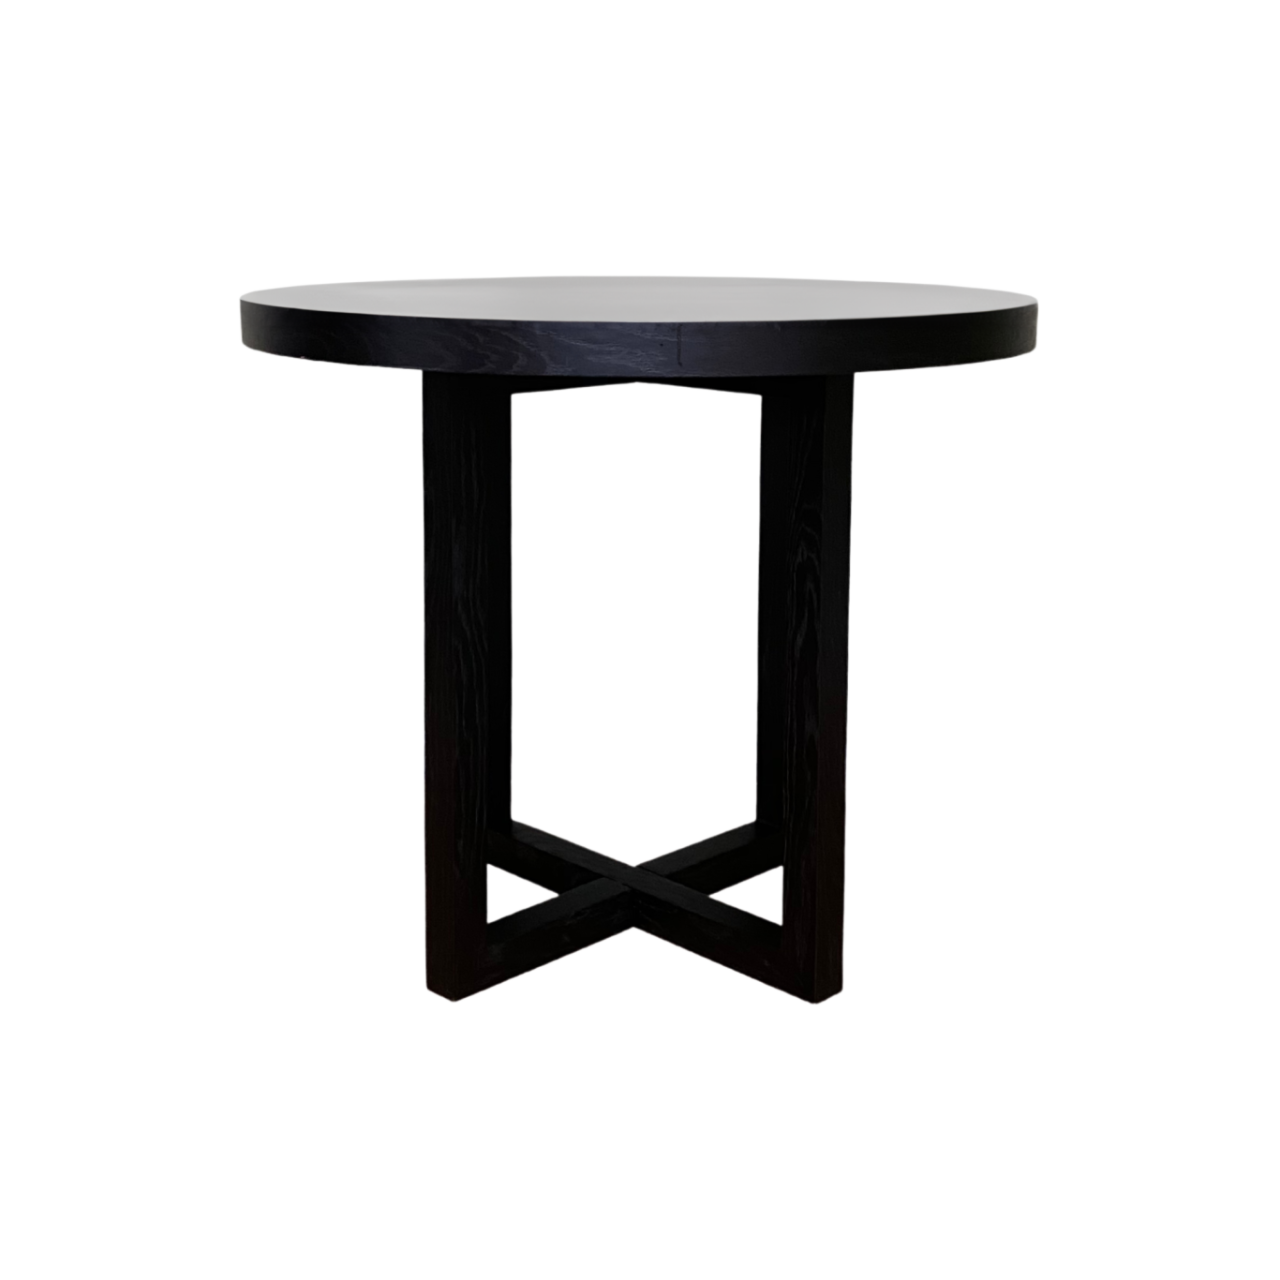 Iris Dining Table 90cms-Wenge (Black Stained Oak)